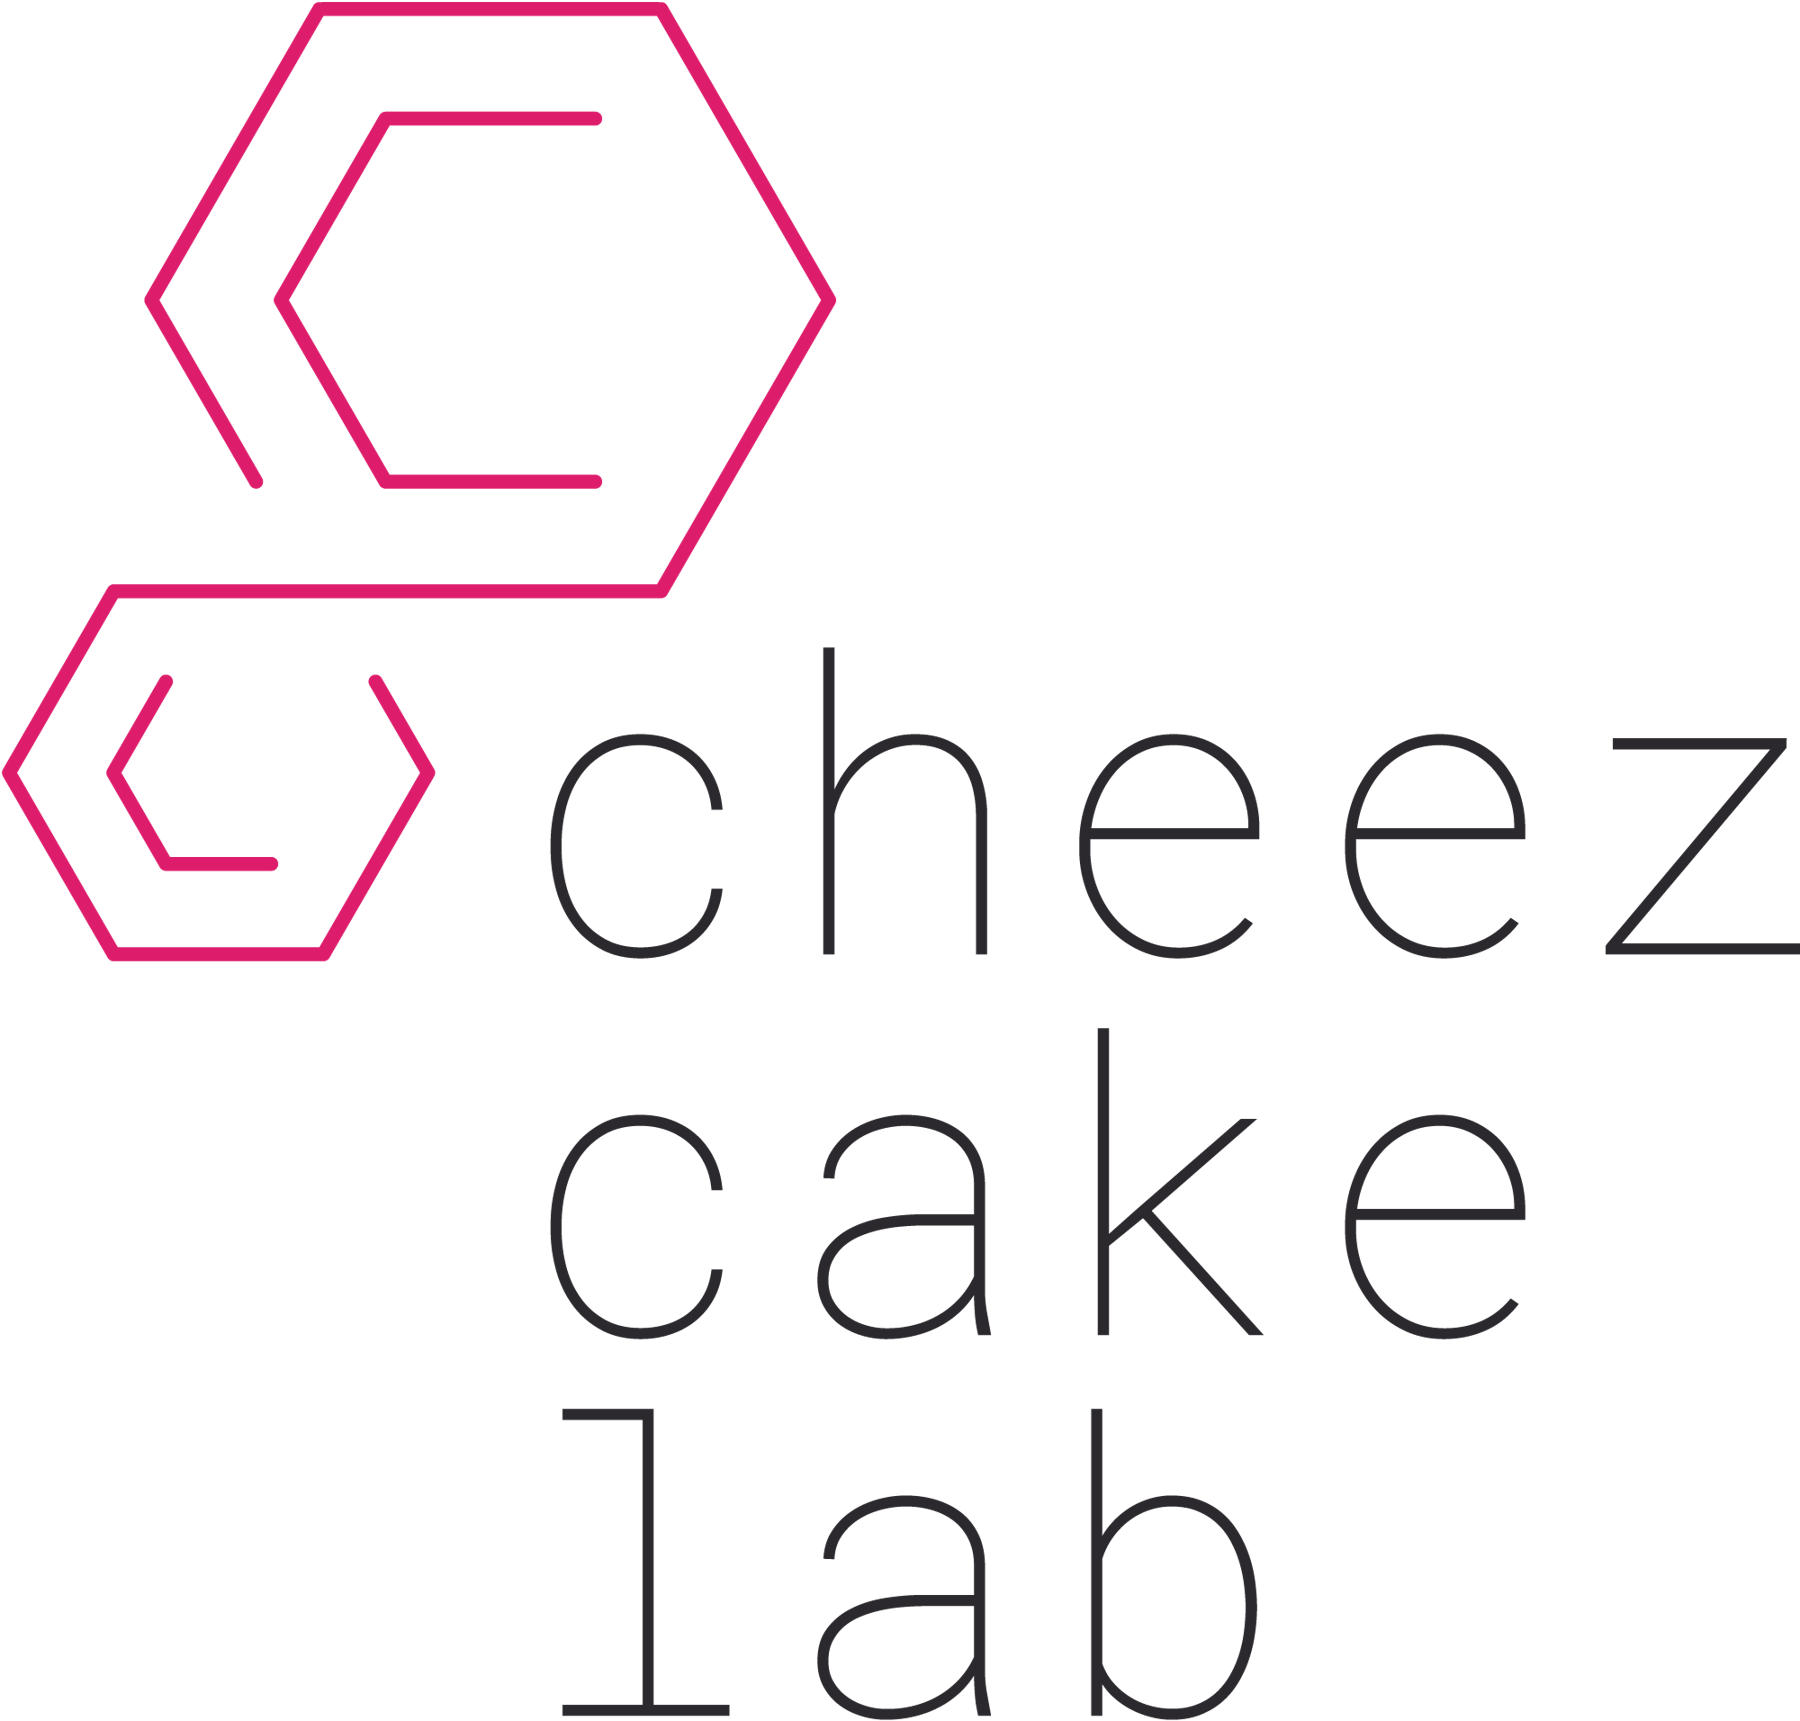 CheezCake Lab Home